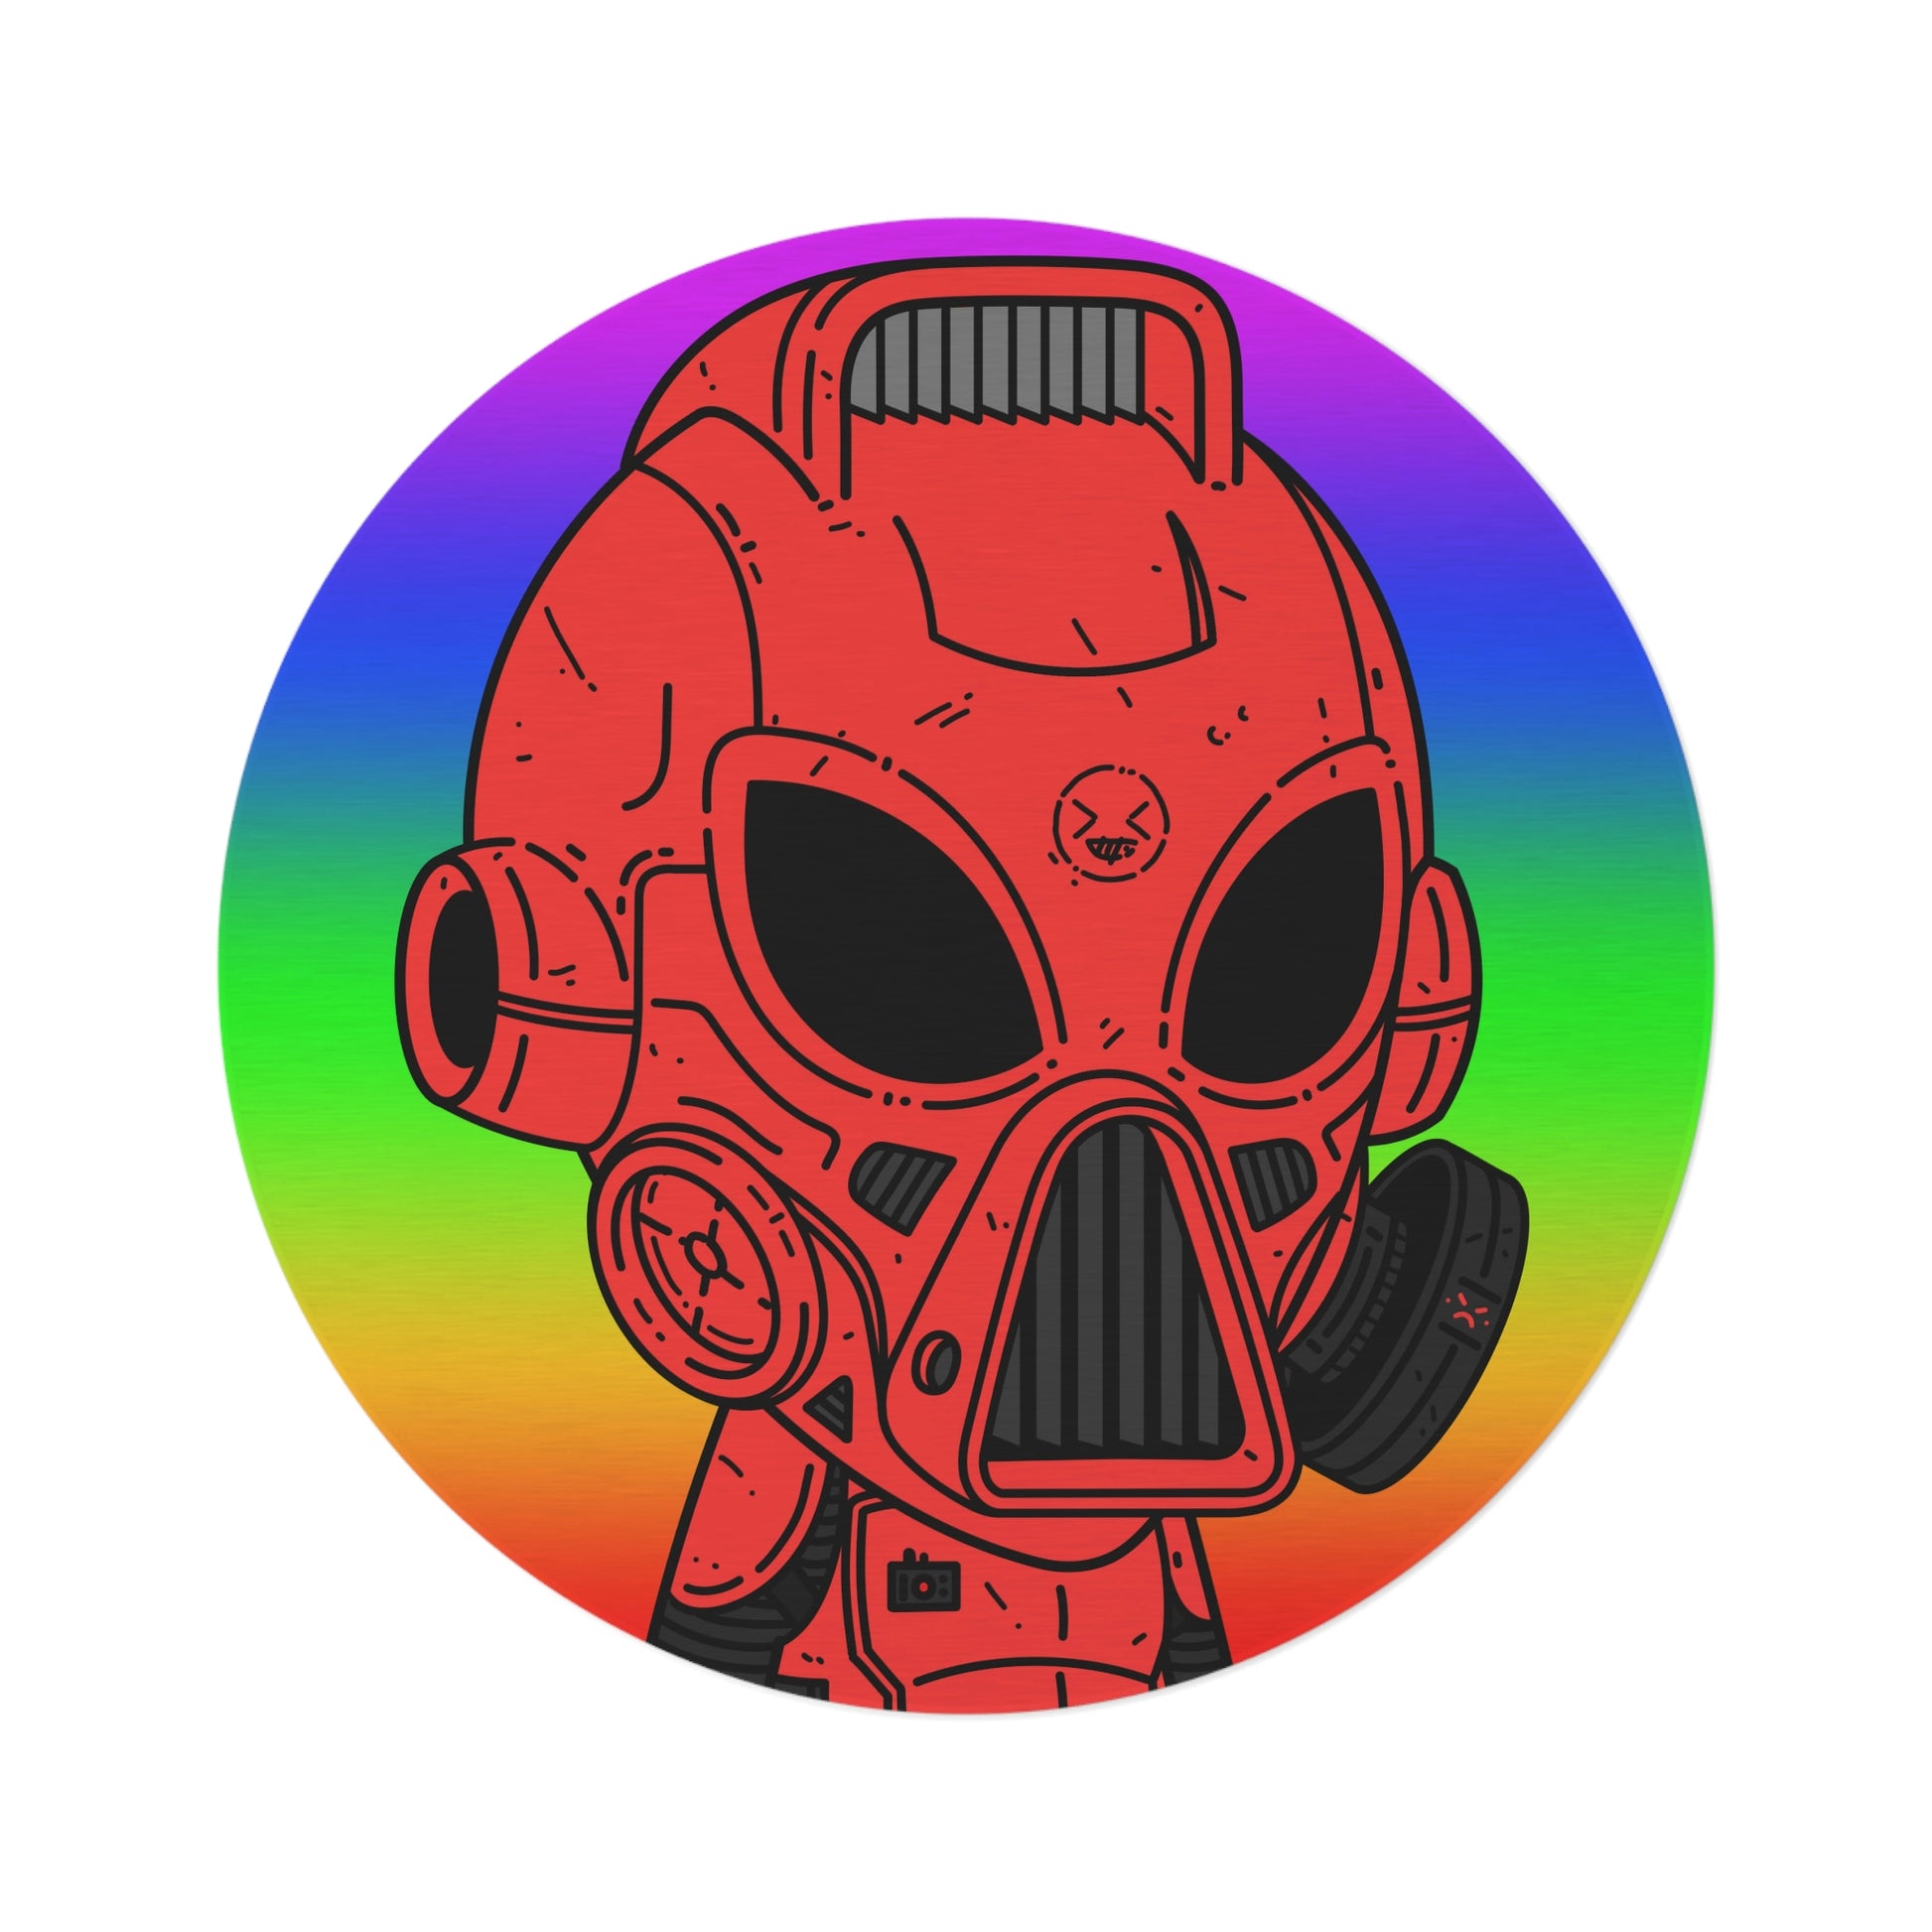 LOL Rainbow Armored Red Future Alien Cyborg Machine Visitor Round Rug - Visitor751